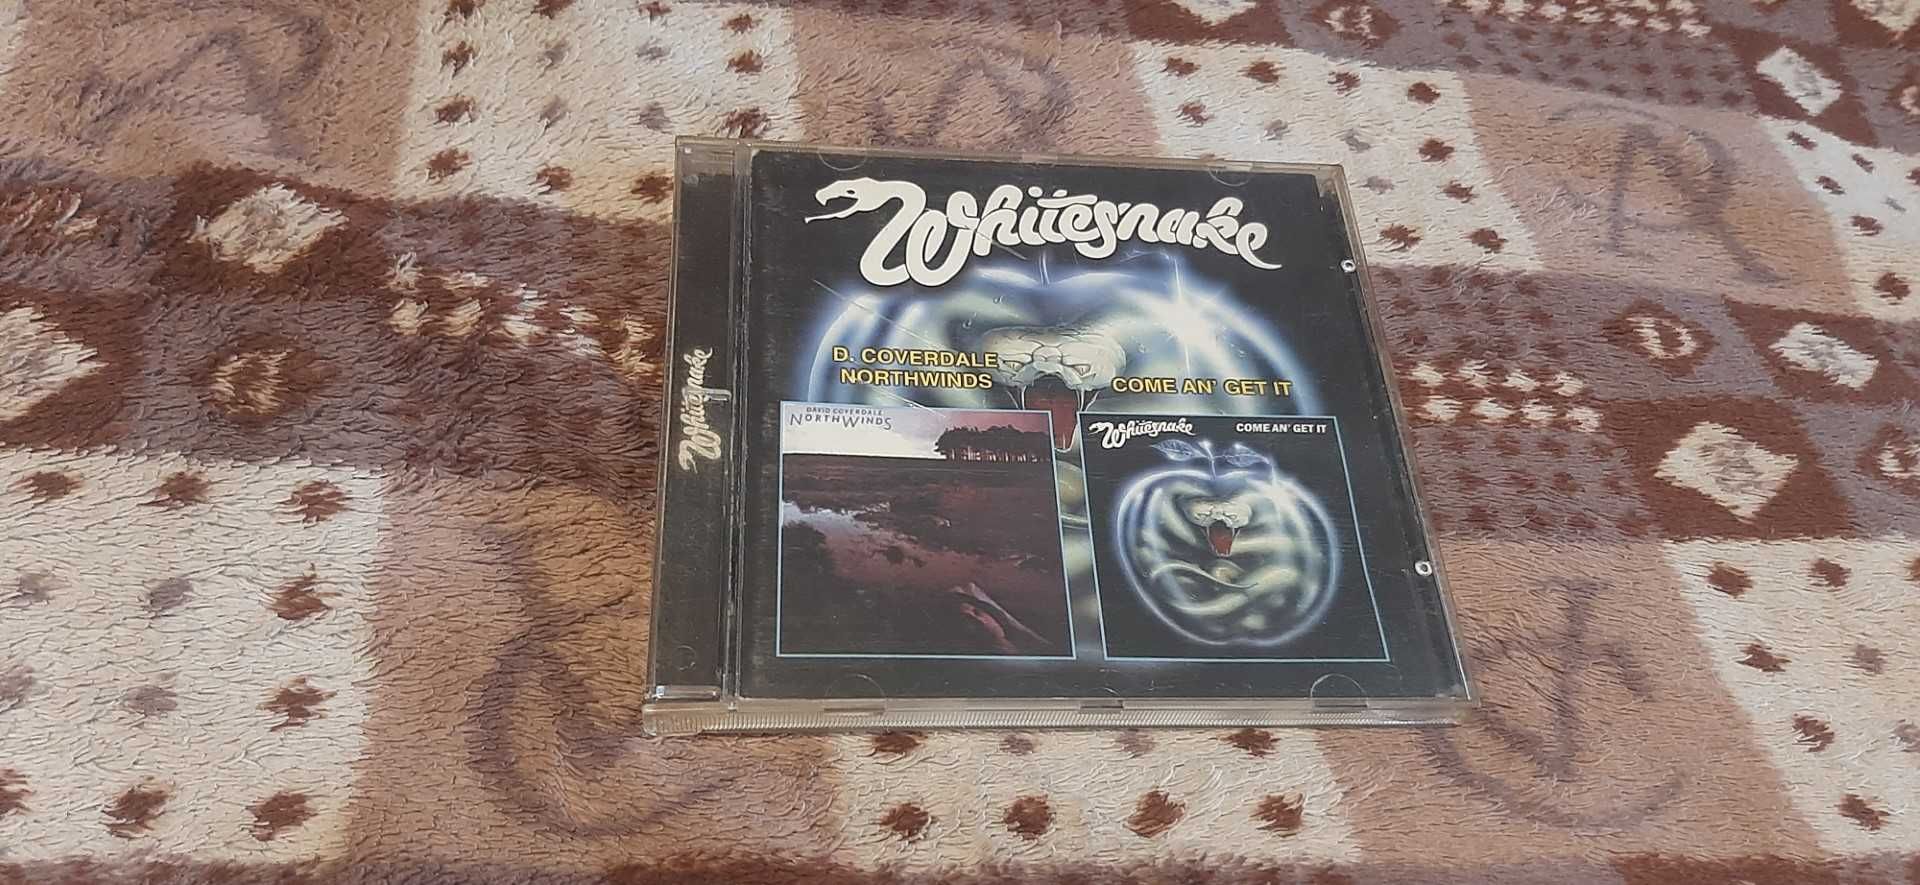 Cafe Del Mar,Hughes-Turner Project,Whitesnake  CD`s